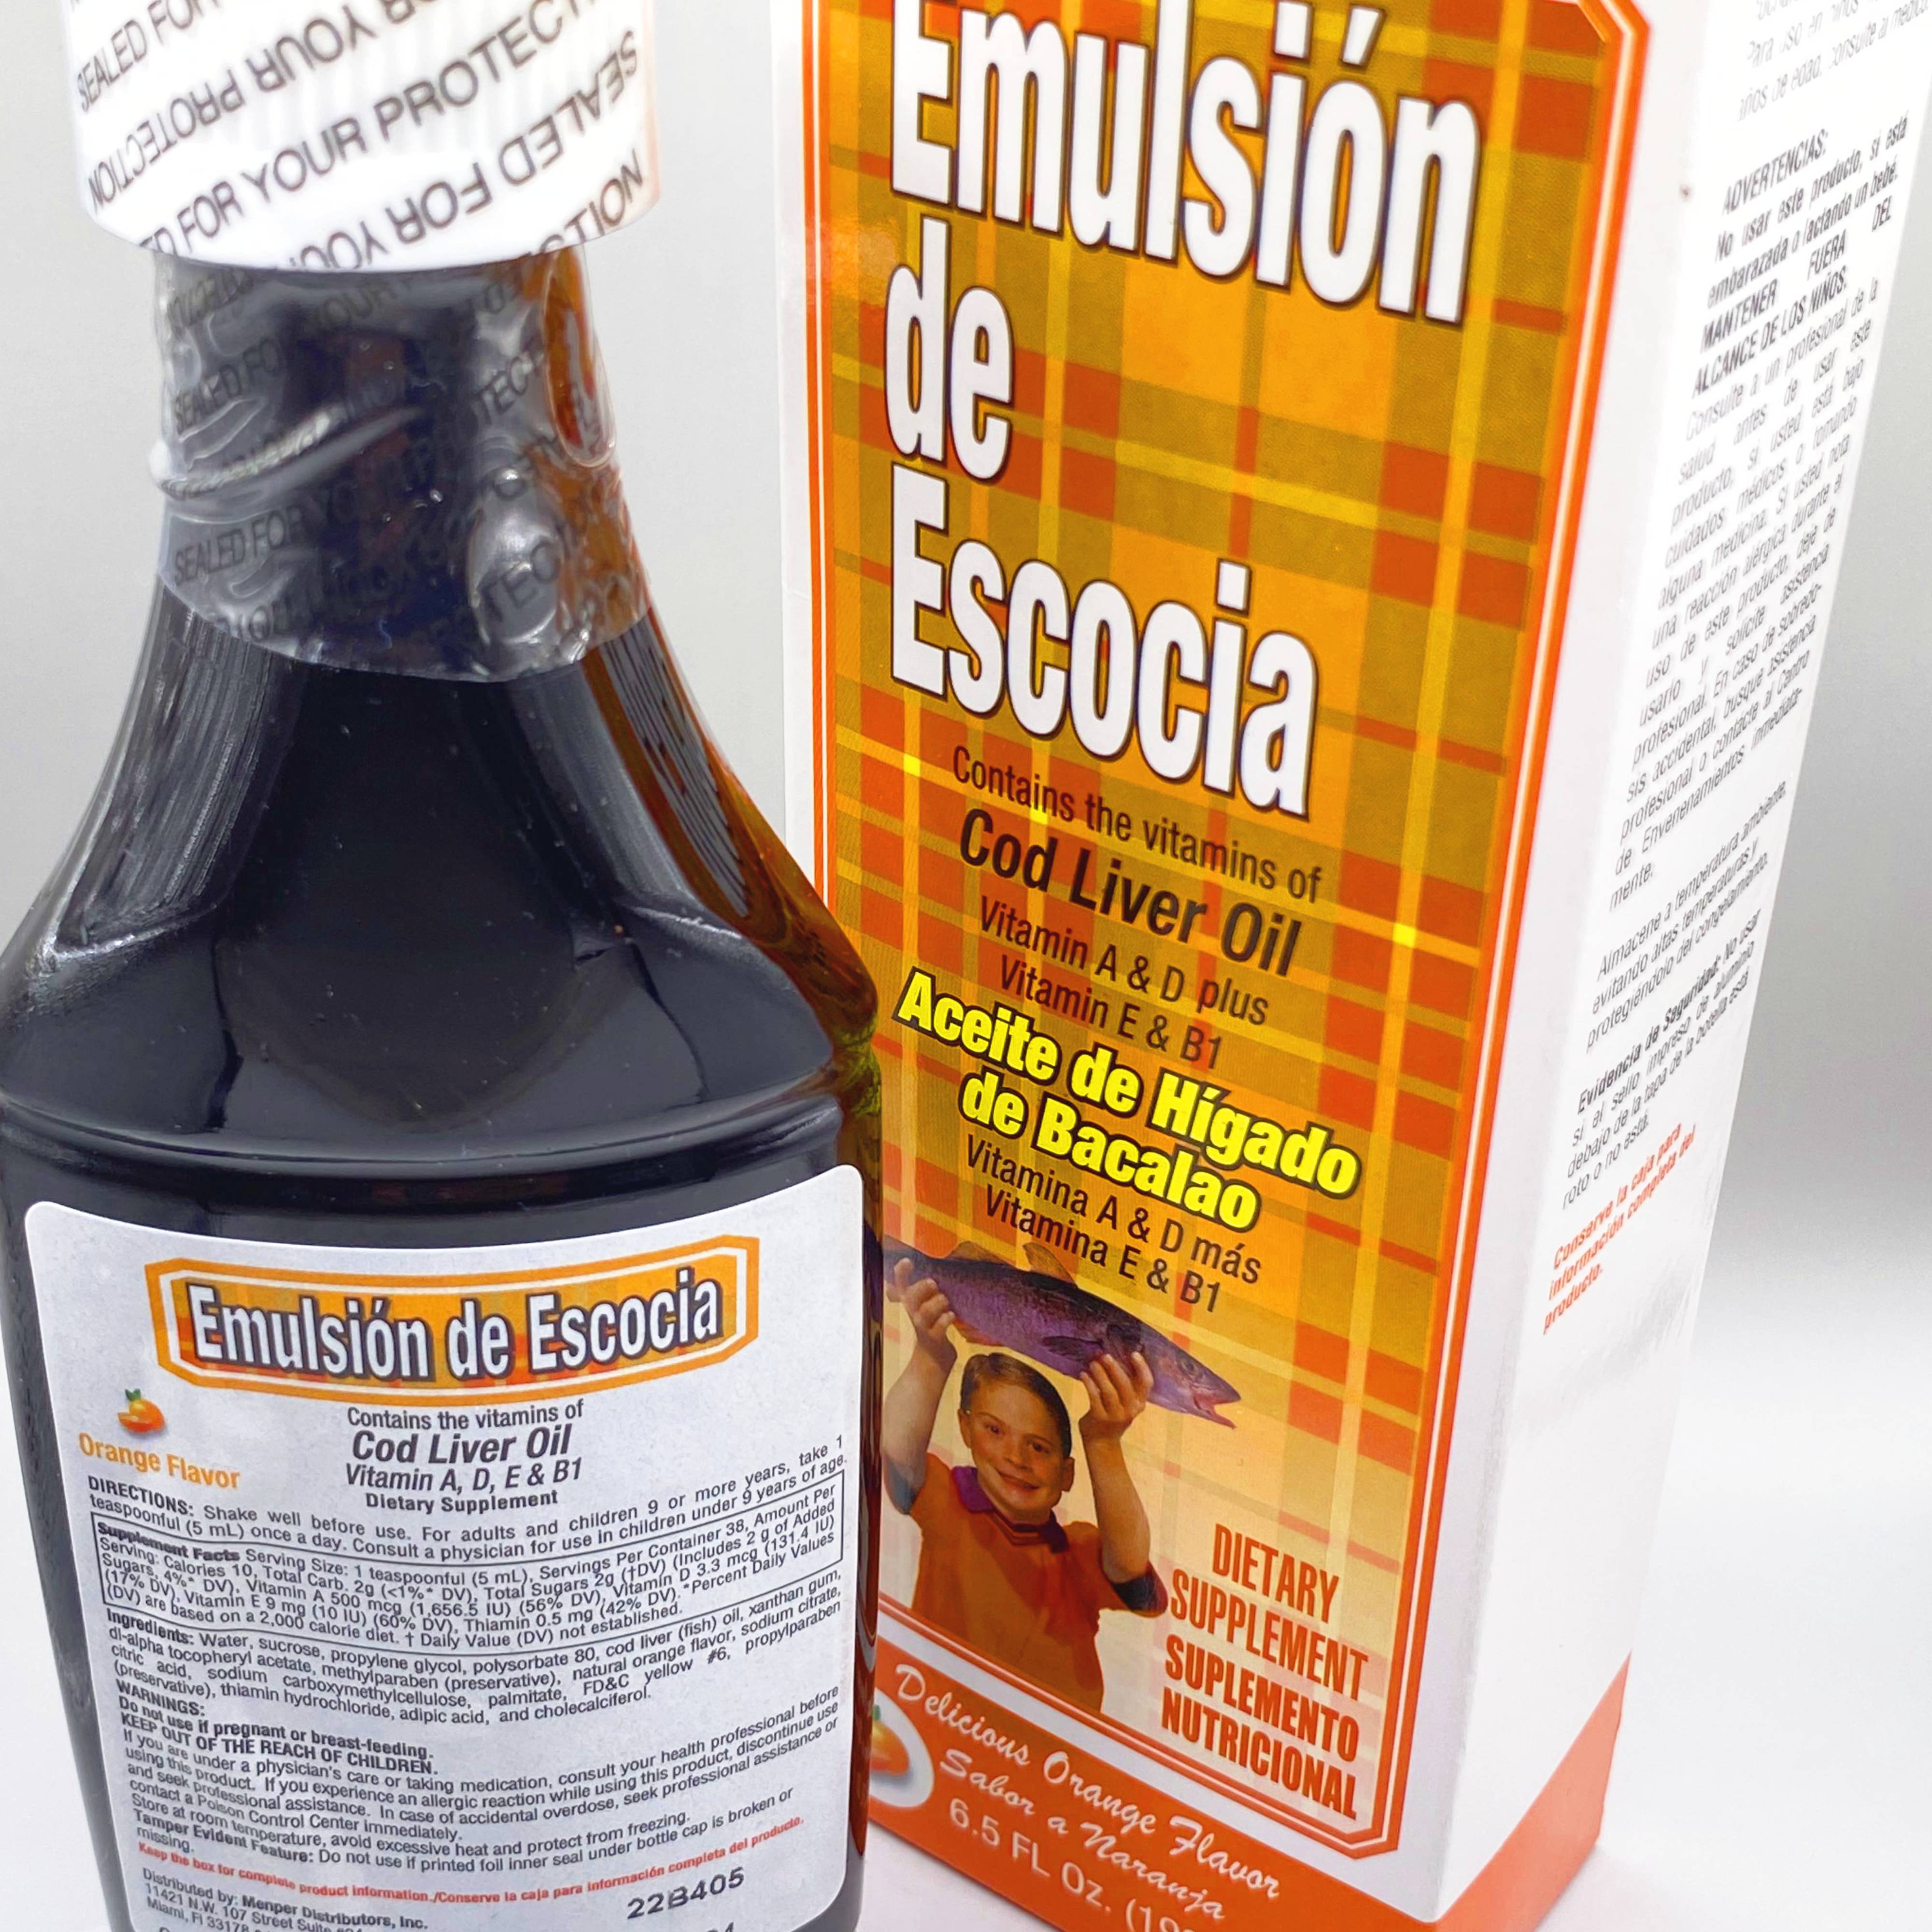 Emulsion de Escocia Cod Liver Oil - Scott's Emulsion Orange Flavor - 6.5 fl  oz - Best Caribbean Health Care Products